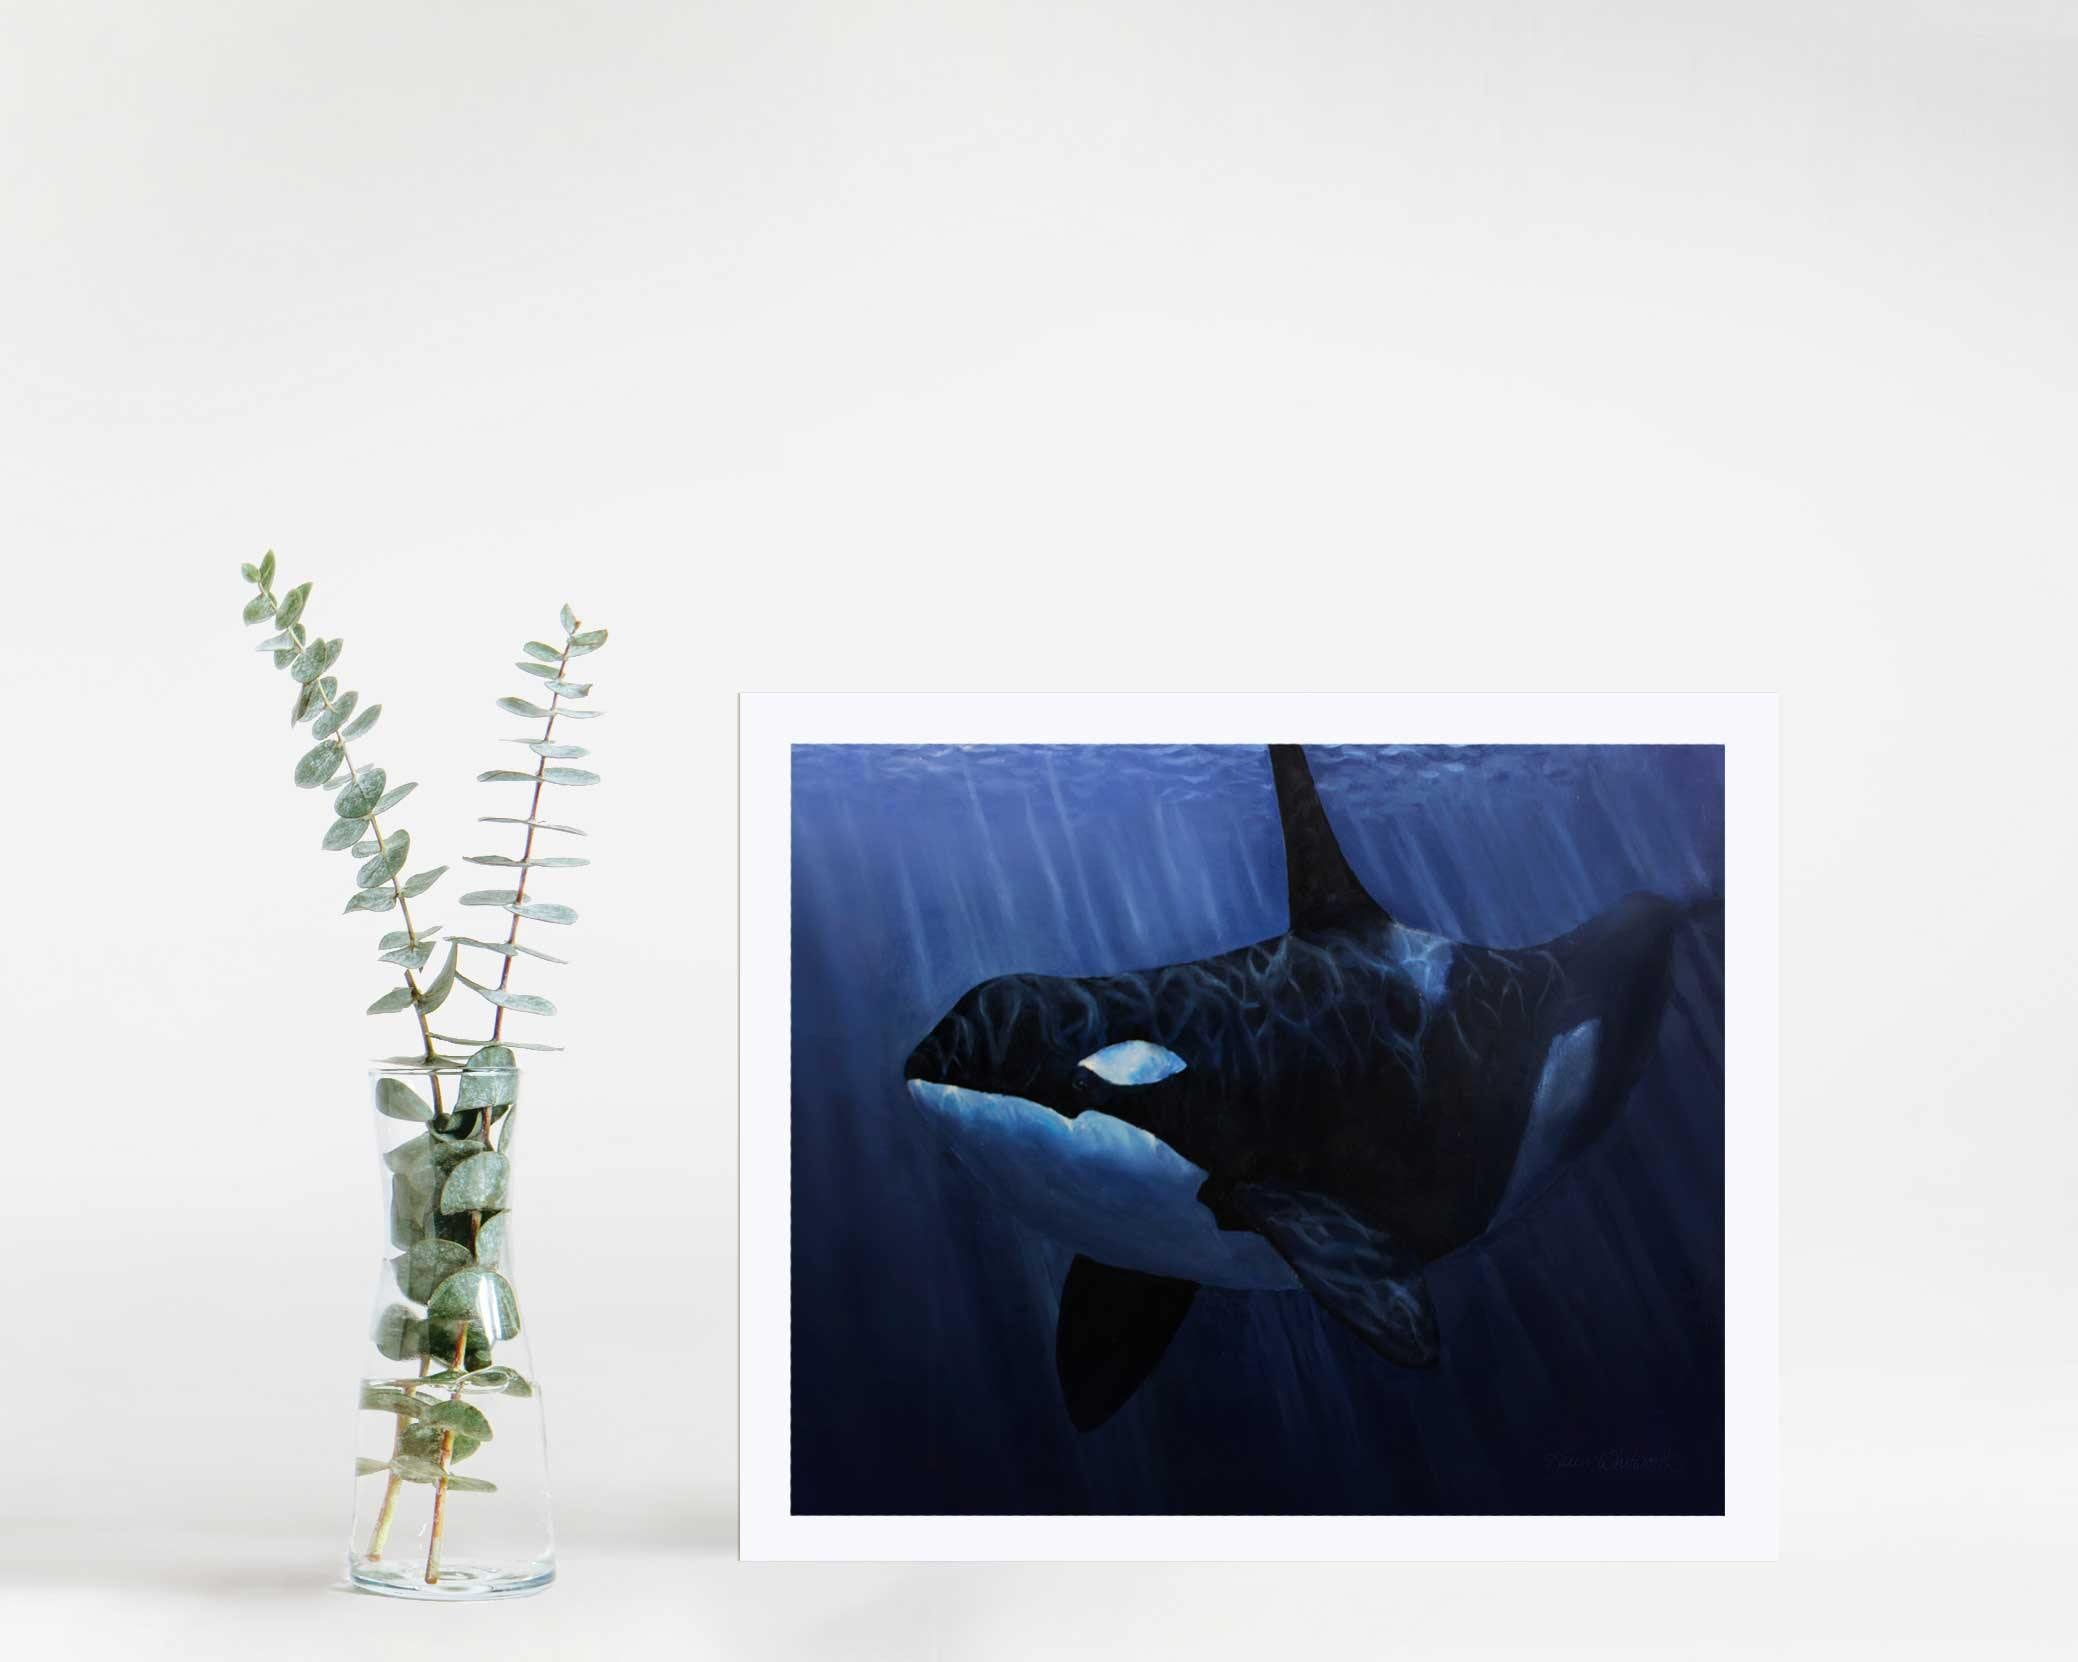 Wall art print of Orca killer whale and deep blue ocean in a painting by ocean artist Karen Whitworth